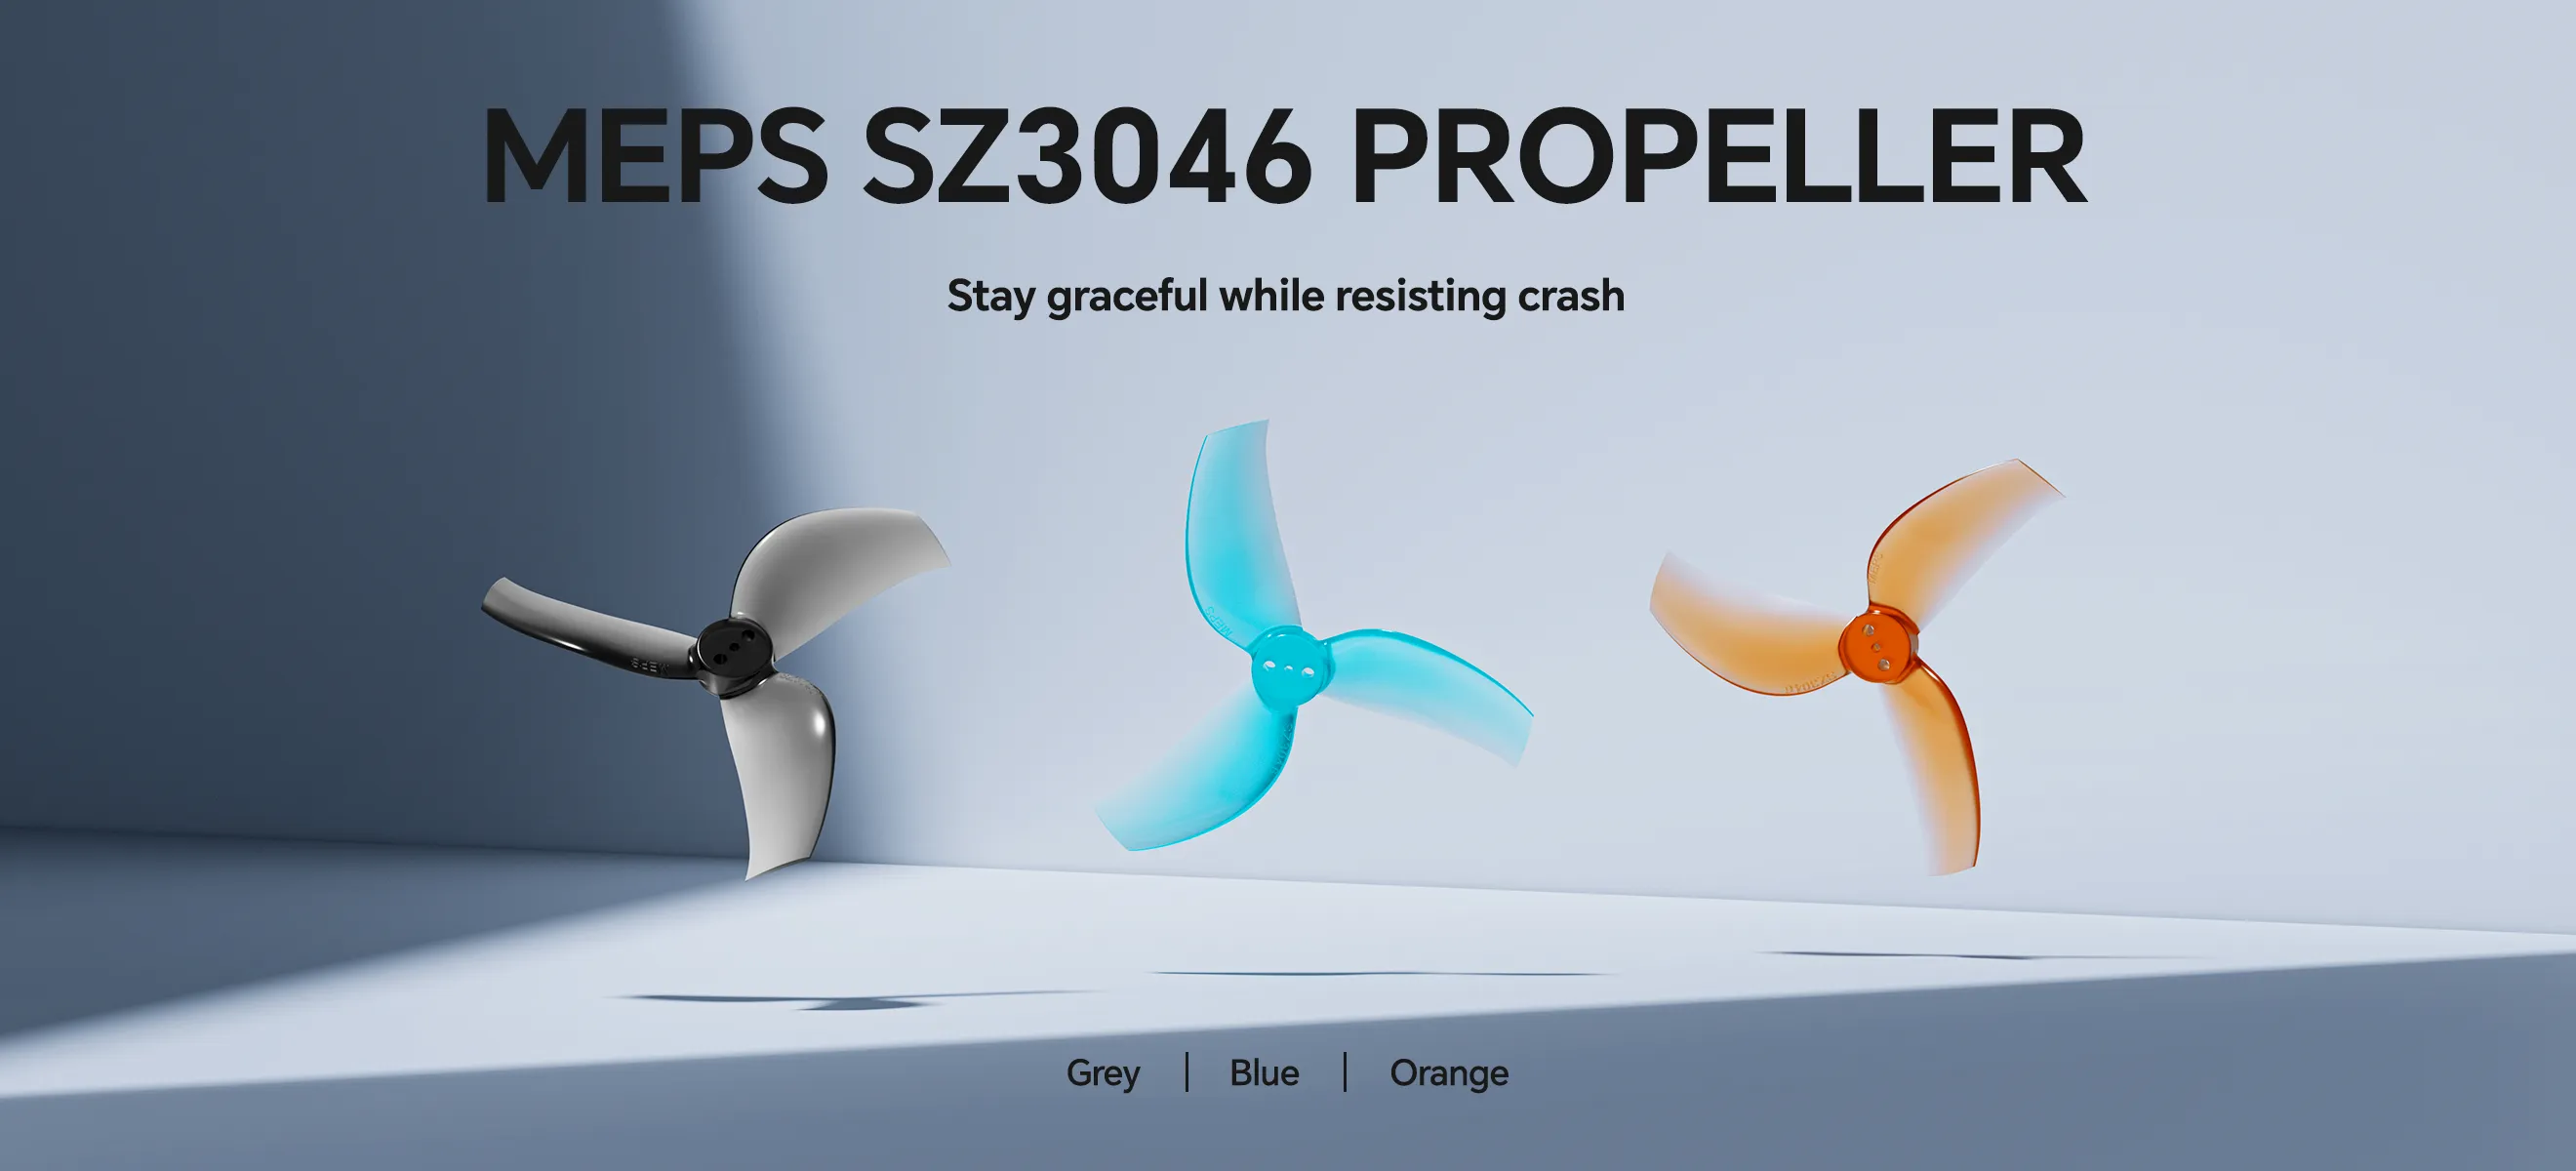 propeller-drone-3046-pc